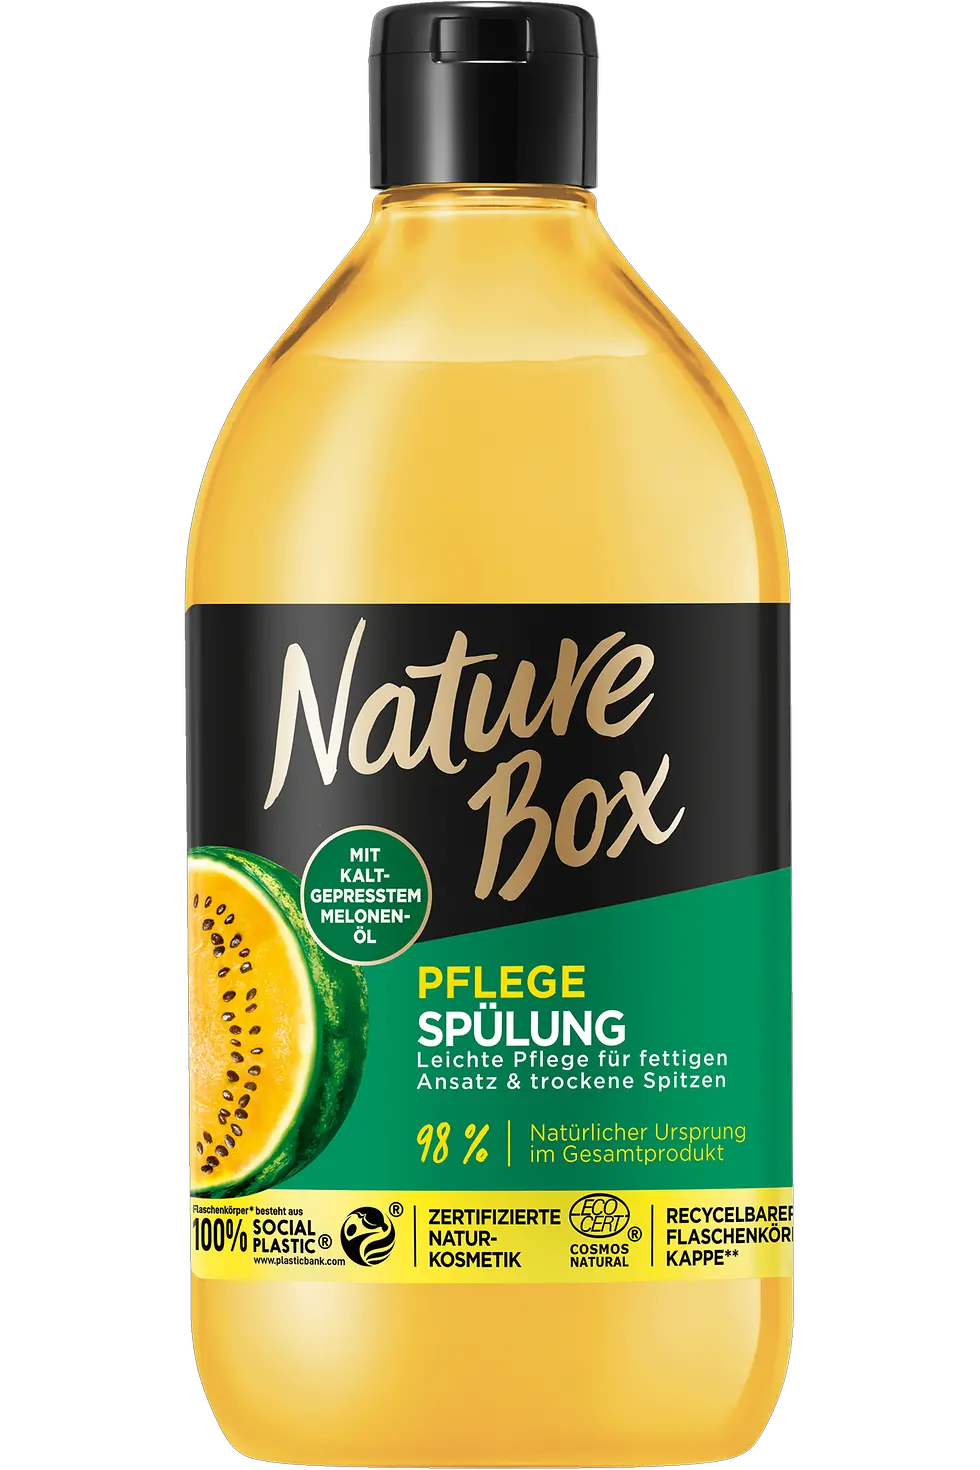 
Nature Box Pflege Spülung